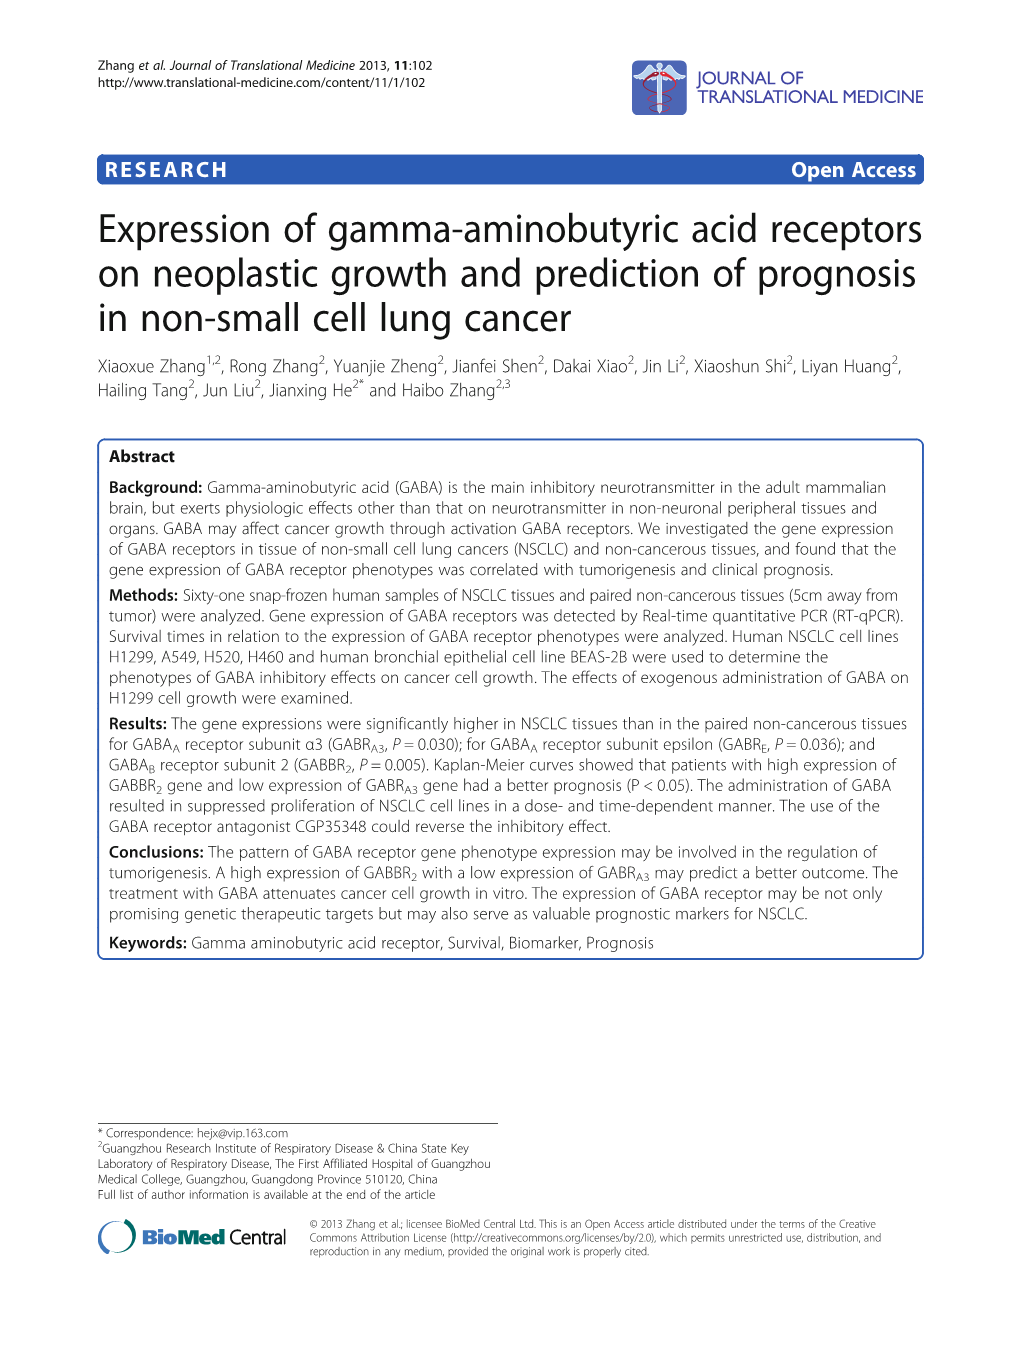 Expression of Gamma-Aminobutyric Acid Receptors on Neoplastic Growth